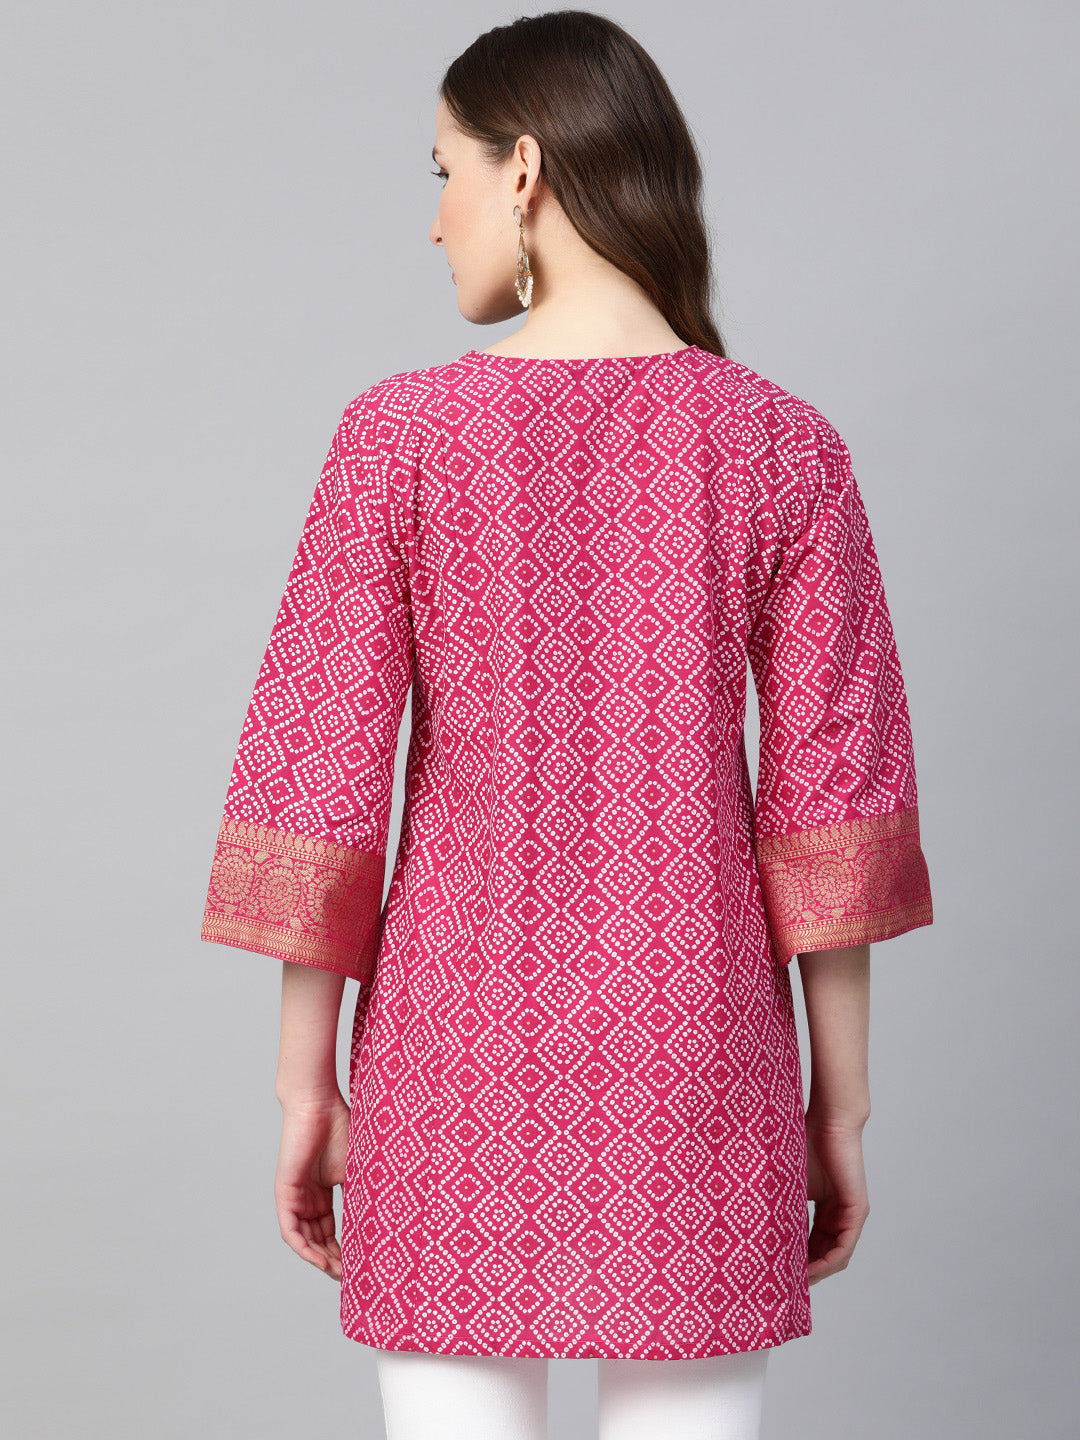 Bhama Couture Pink & White Bandhej Print Tunic